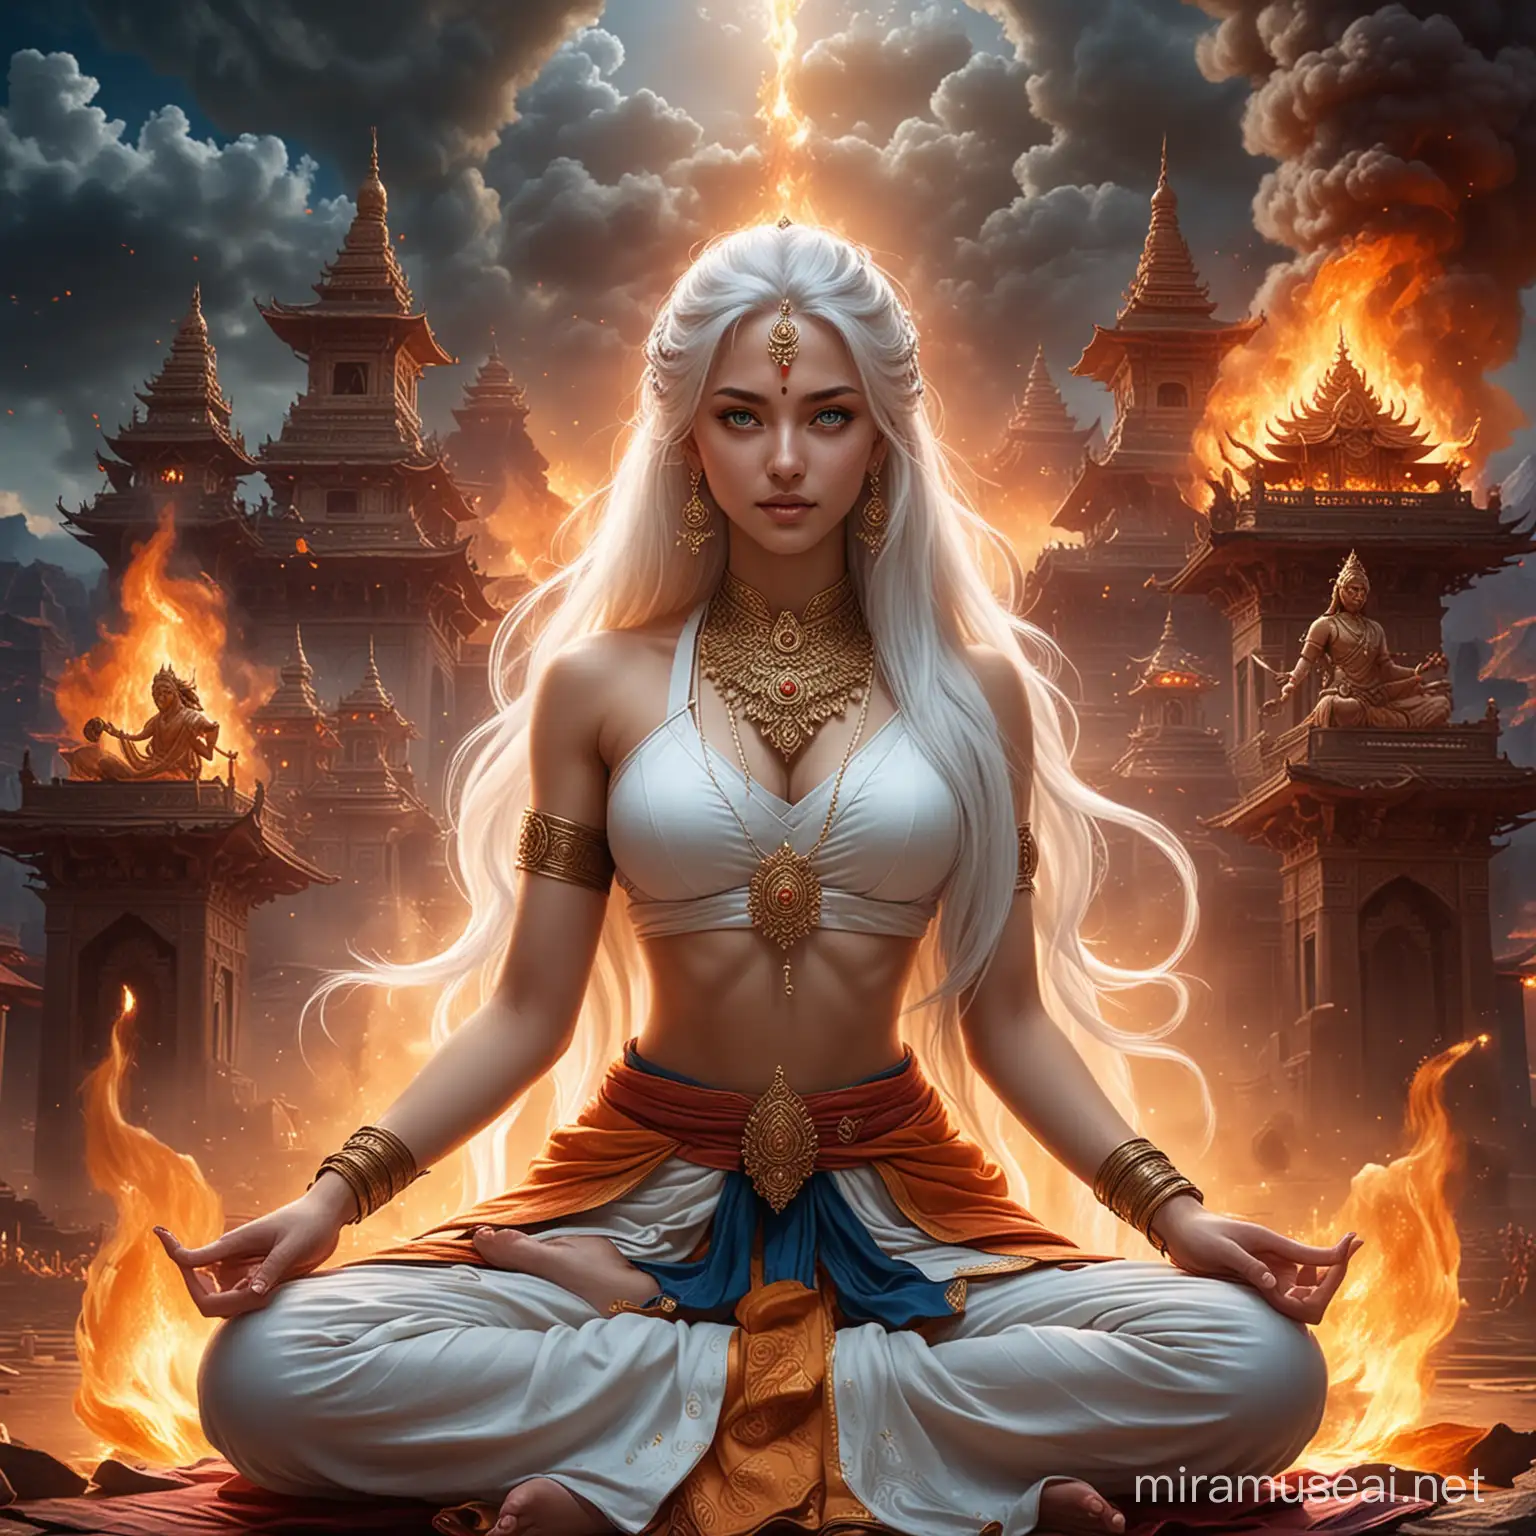 Fierce Hindu Empress in Lotus Combat Amidst Fiery Demonic Goddesses